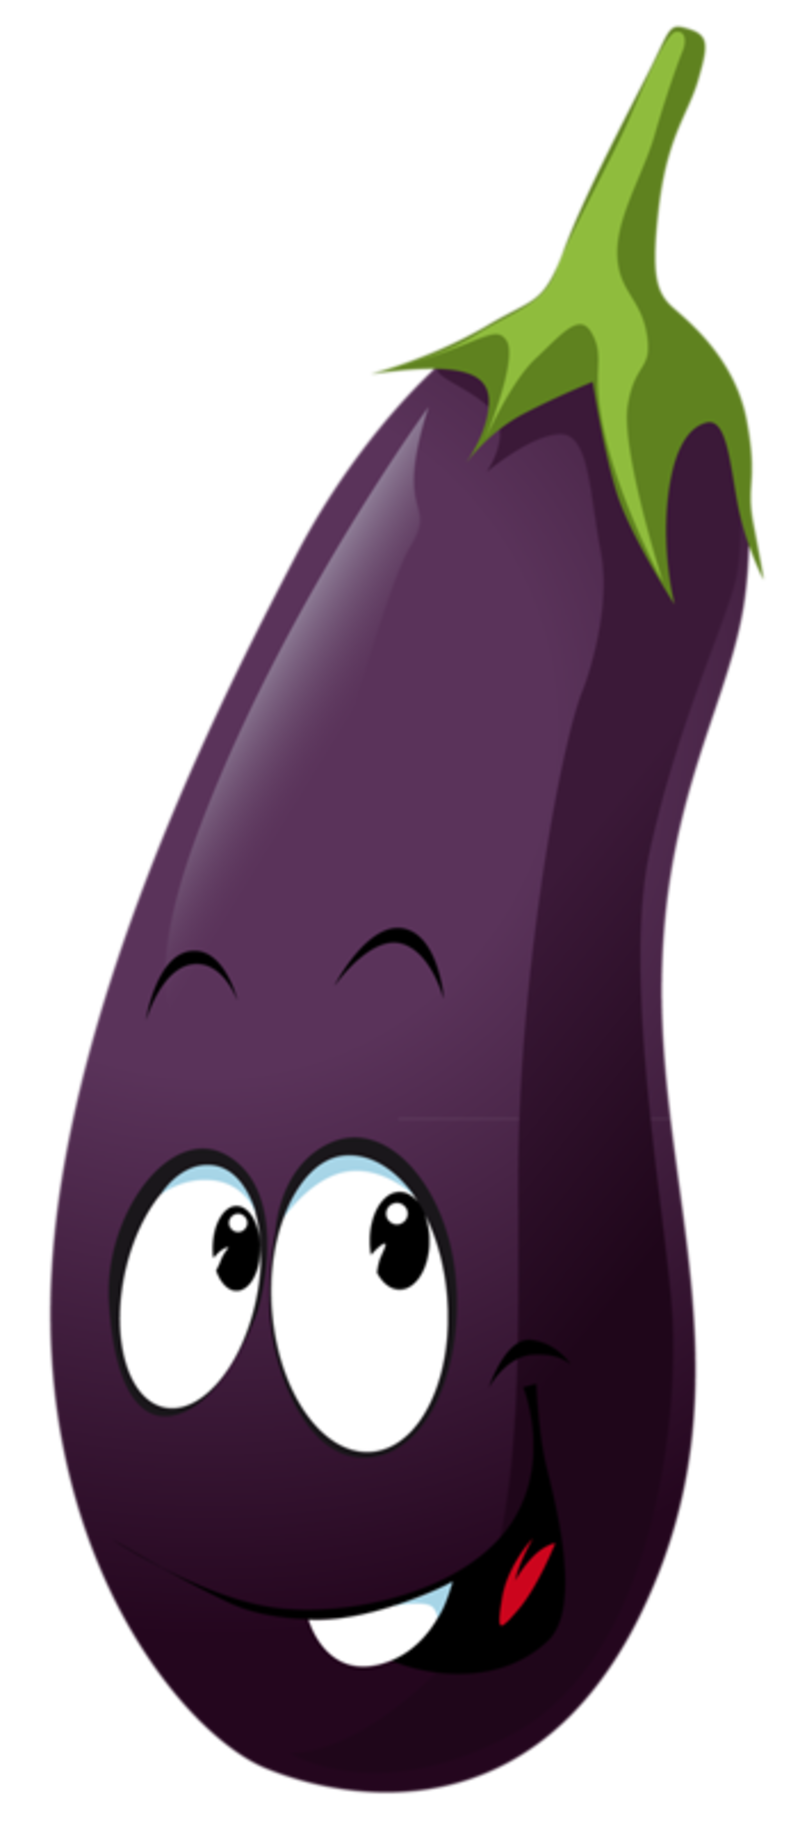  e d f. Onion clipart cartoon purple